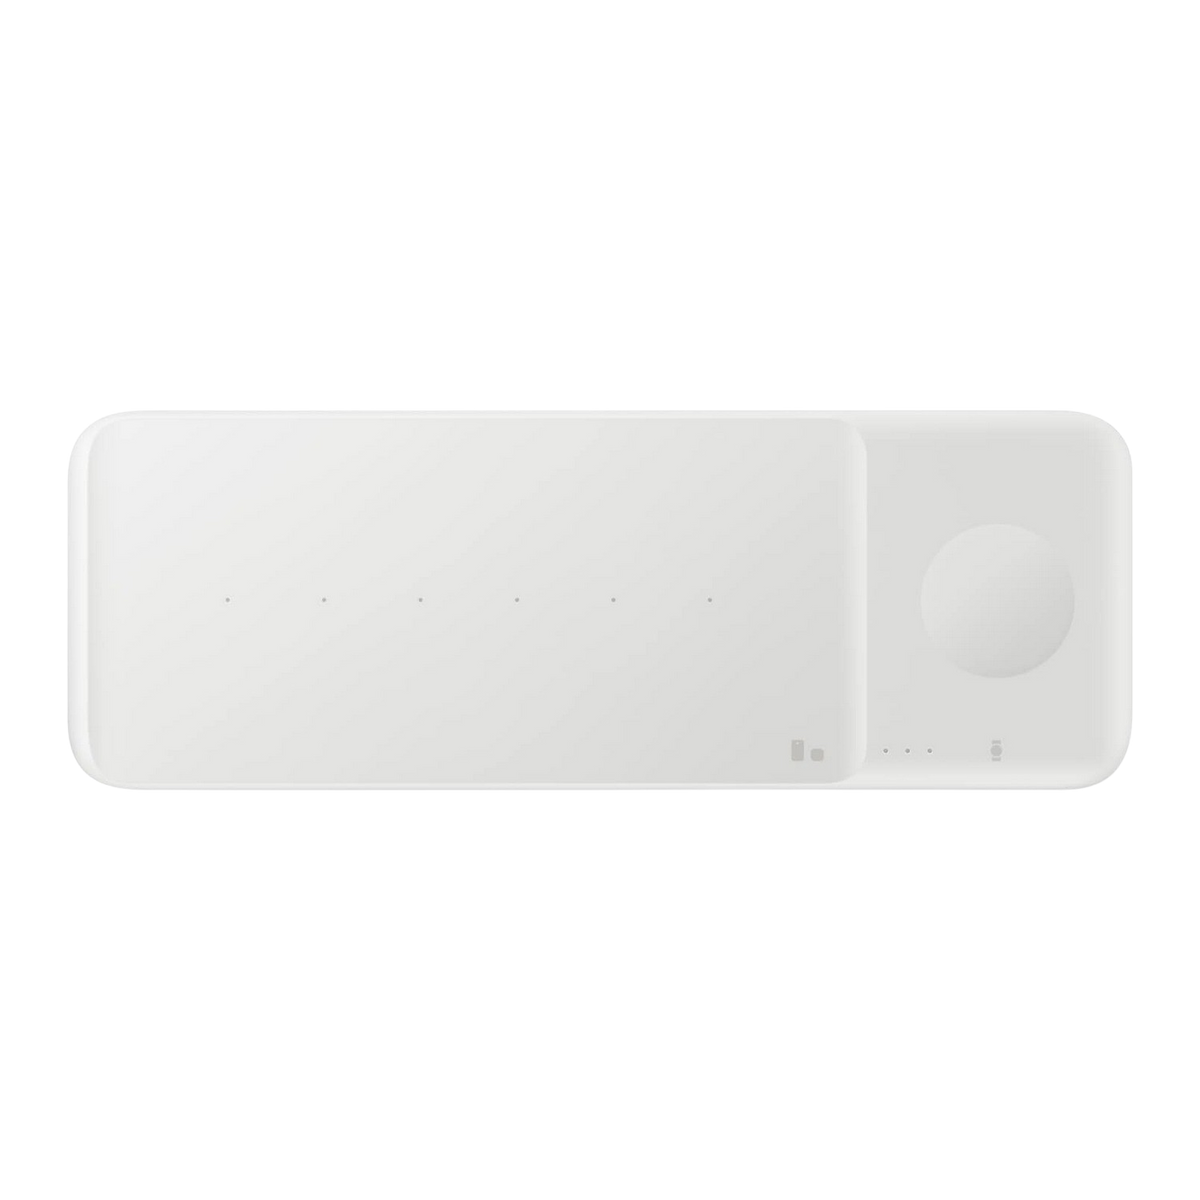 Kabel Weiß - Ladegeräte Trio & Apple, Pad Wireless SAMSUNG Ladegerät Weiß